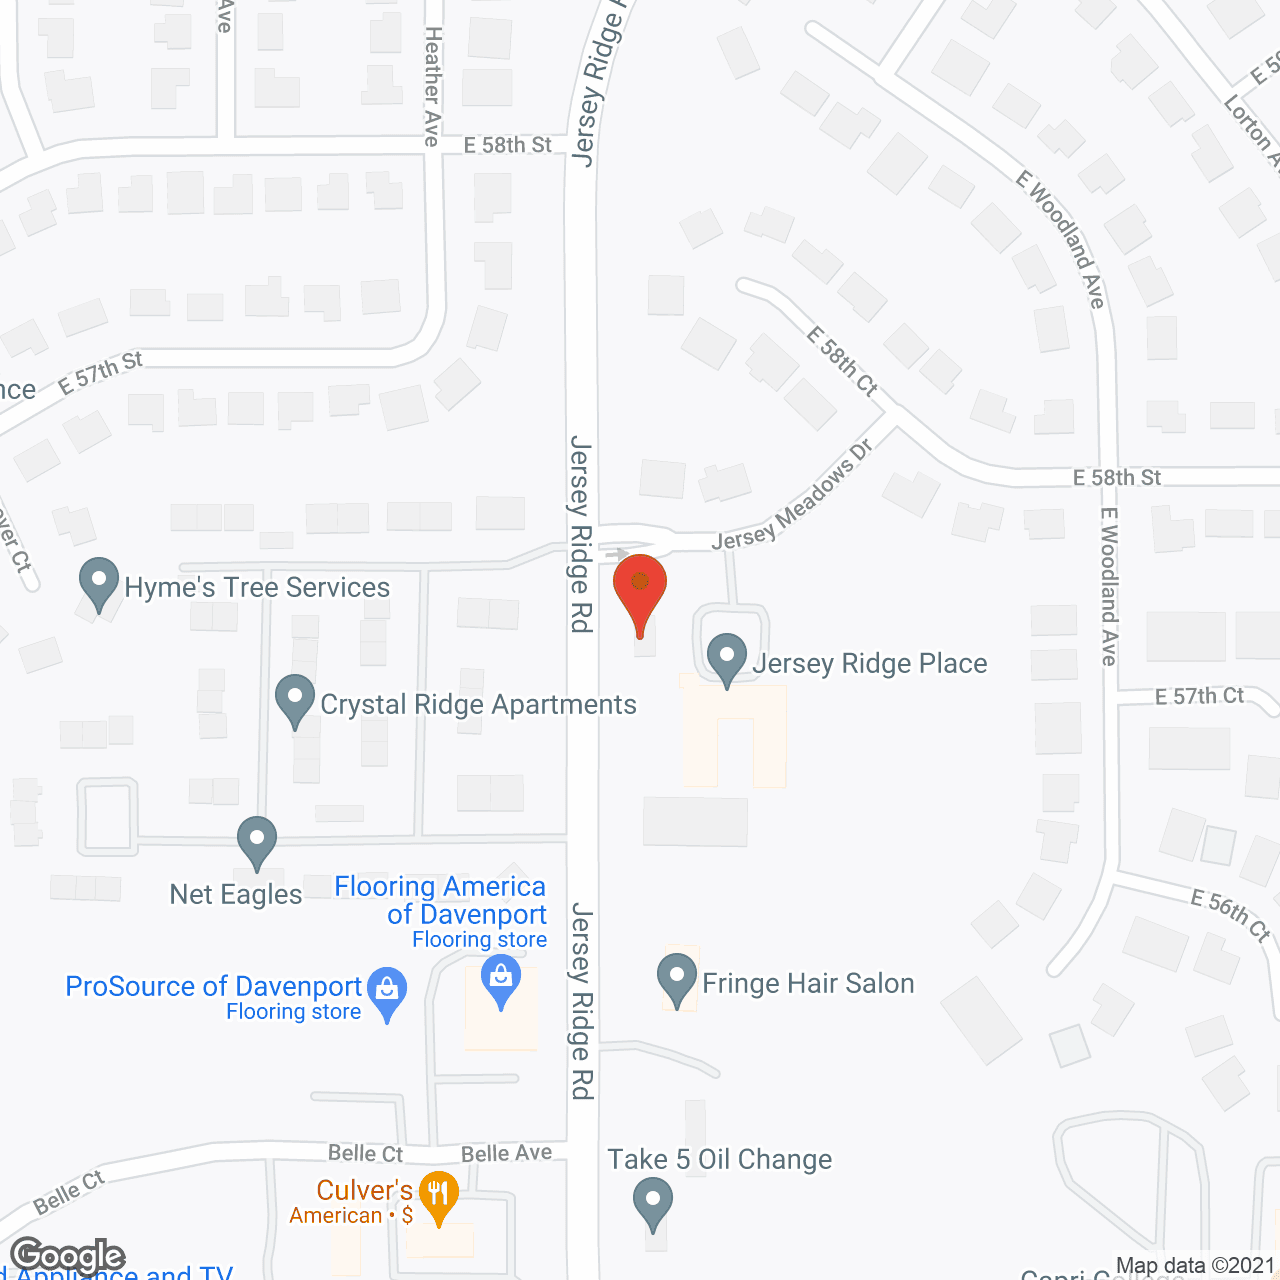 Jersey Ridge Place in google map